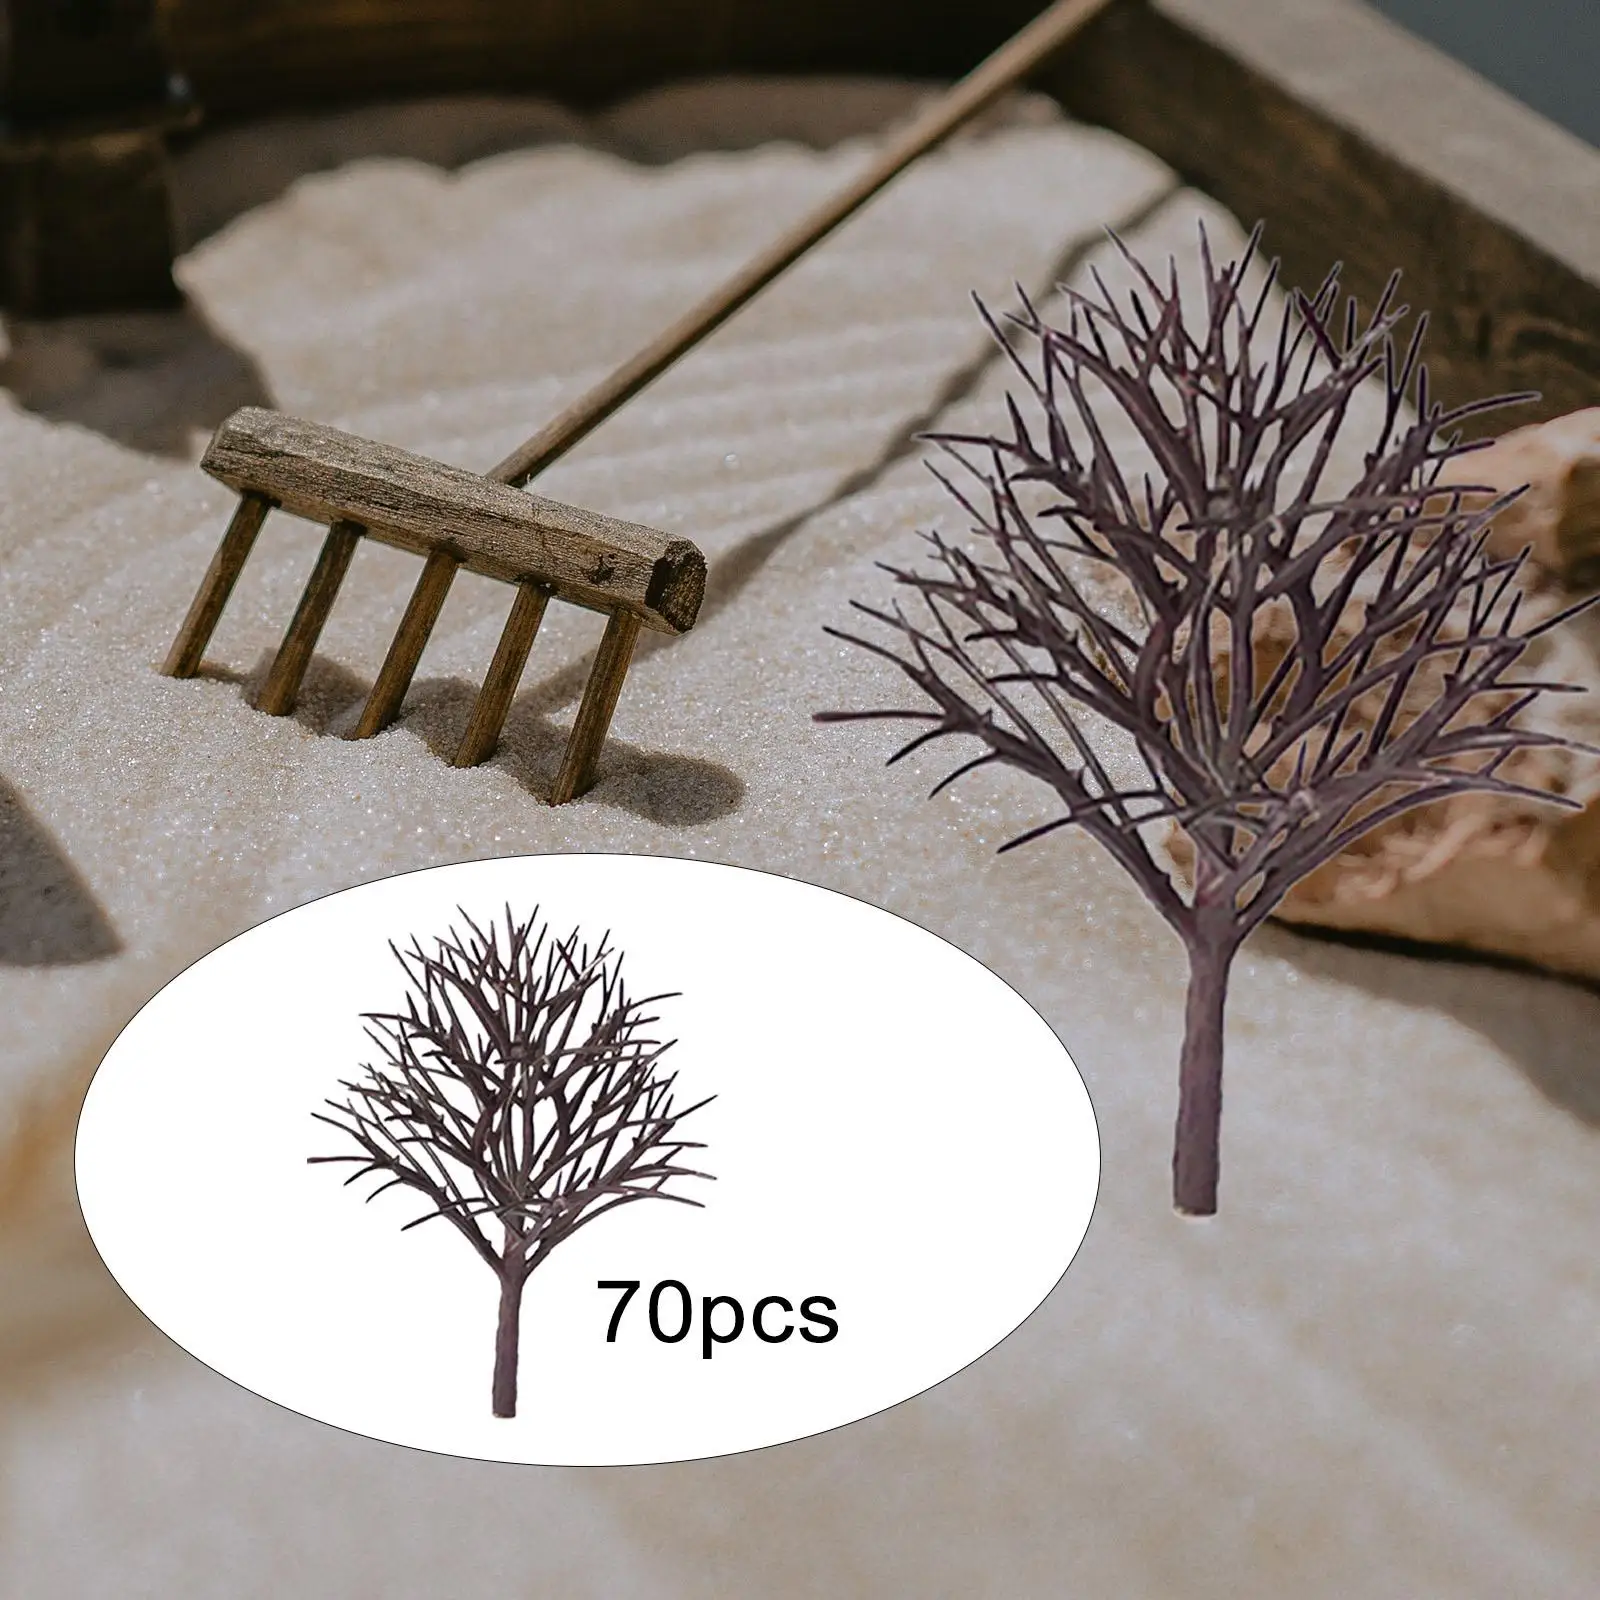 70 Pieces Mini Model Trees 6cm Diorama Supplies Train Scenery Architecture Trees Diorama Tree Scenery Tree for Landscape Scenery